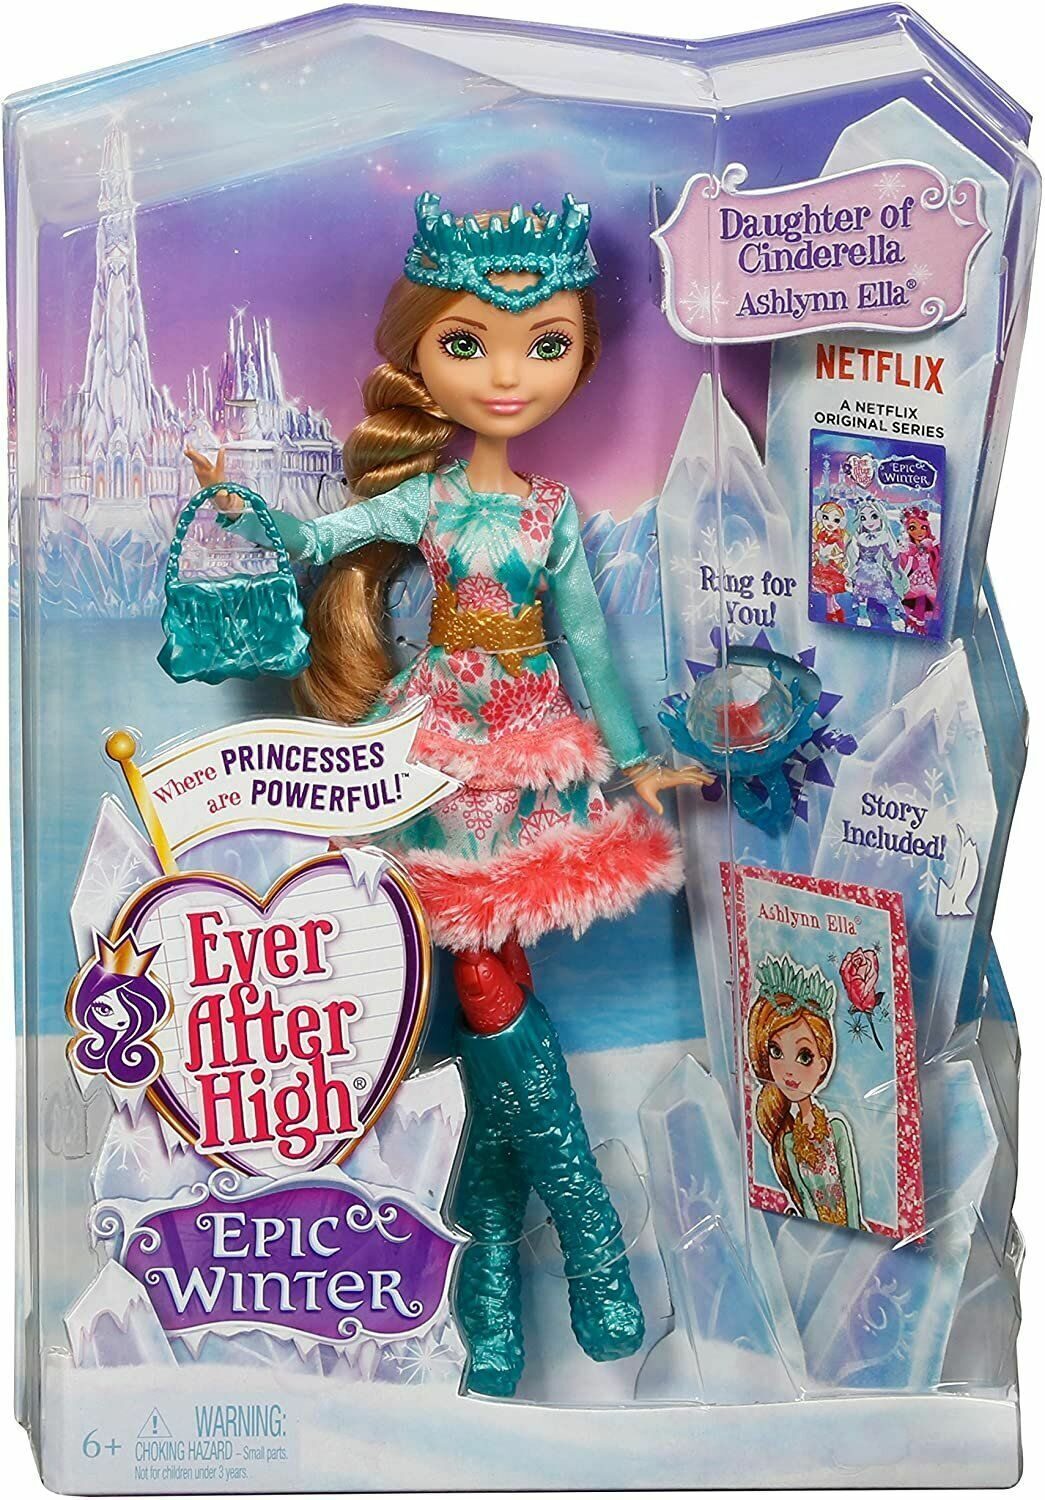 Mattel ever after high “epic winter” ashlynn ella